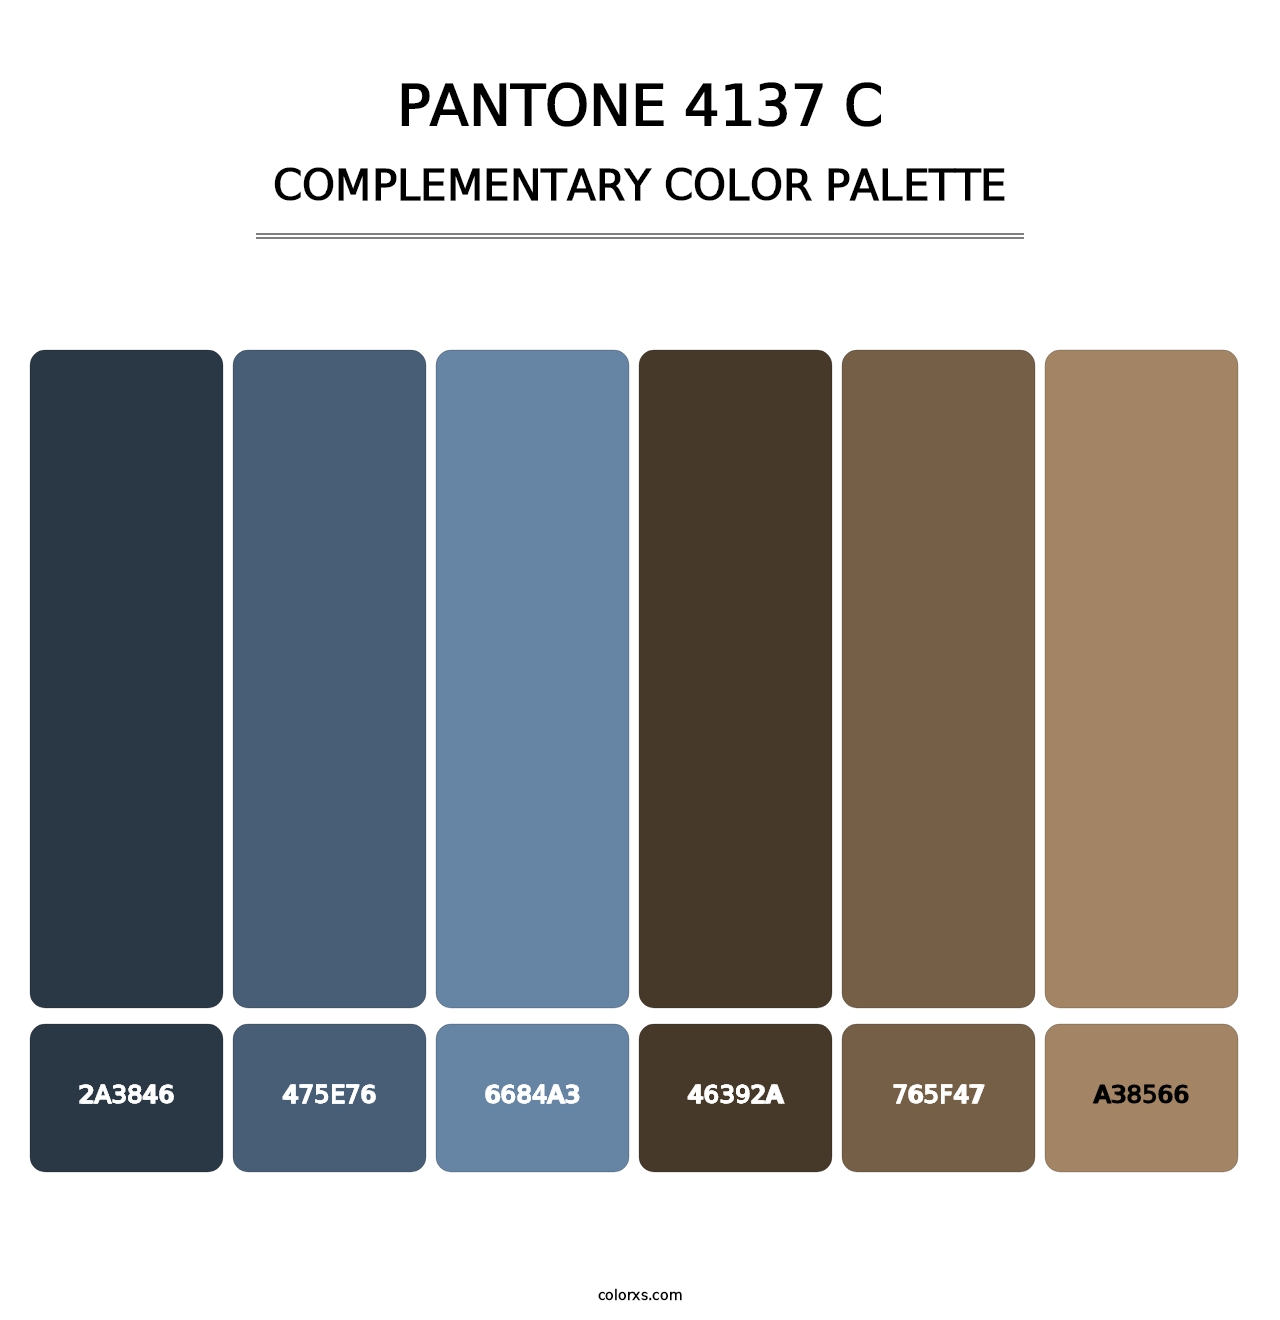 PANTONE 4137 C - Complementary Color Palette